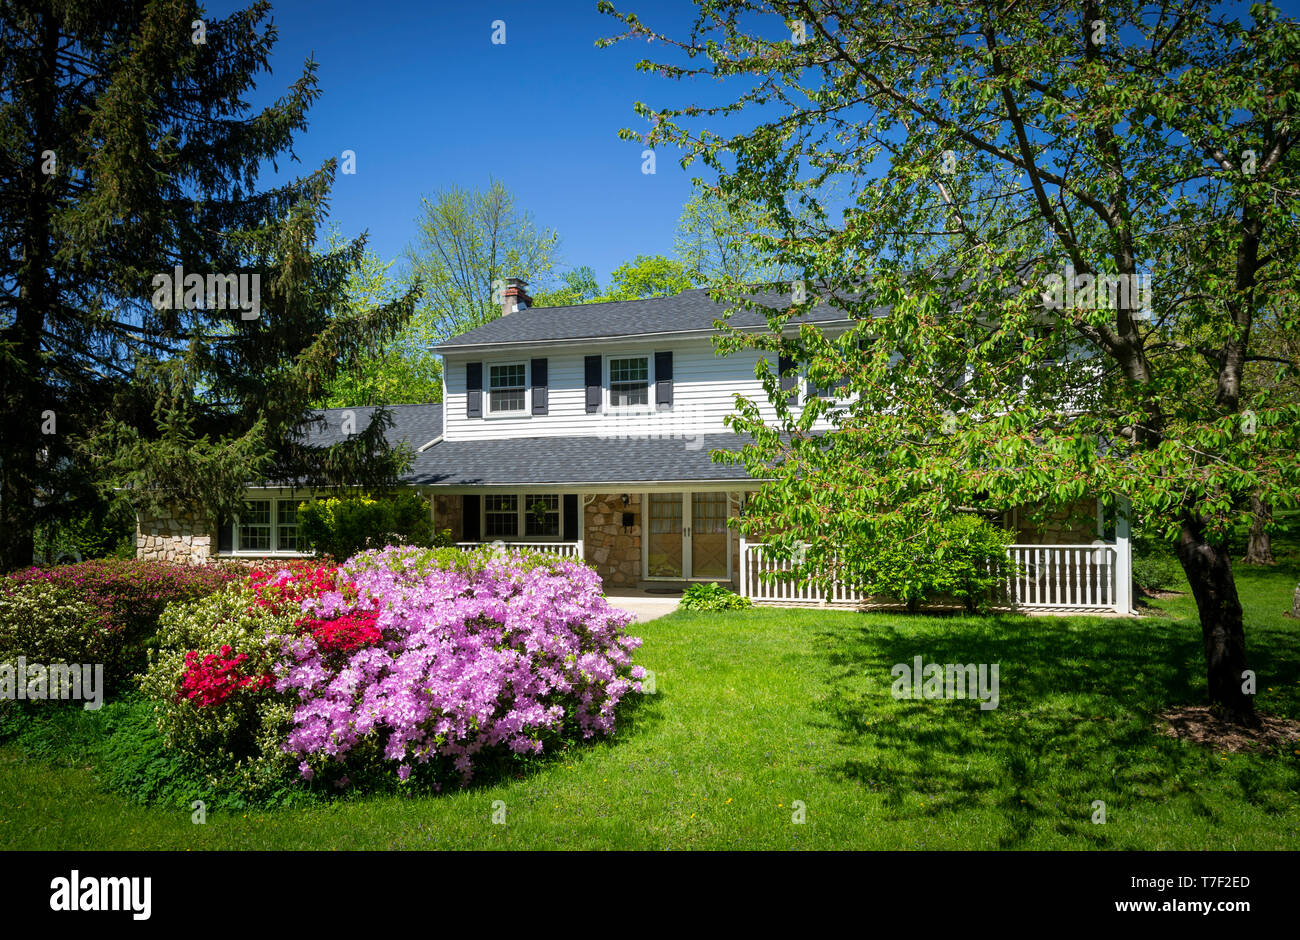 Single Family Home In Residential Suburban Neighborhood, Pennsylvania, USA Stock Photo